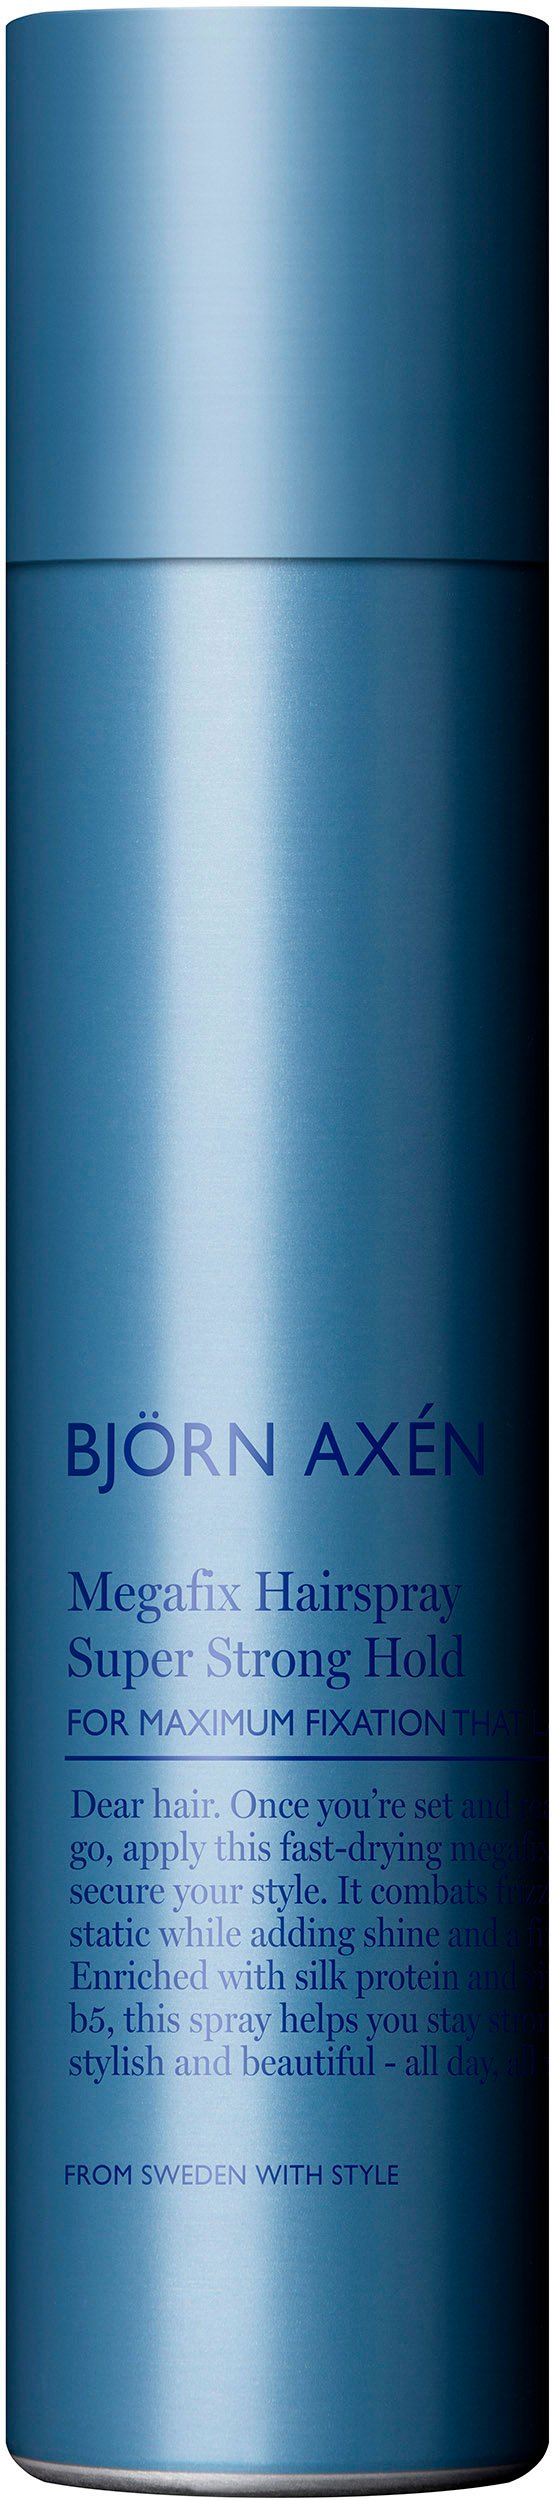 Björn Axén Megafix hairspray super strong hold 250 ml